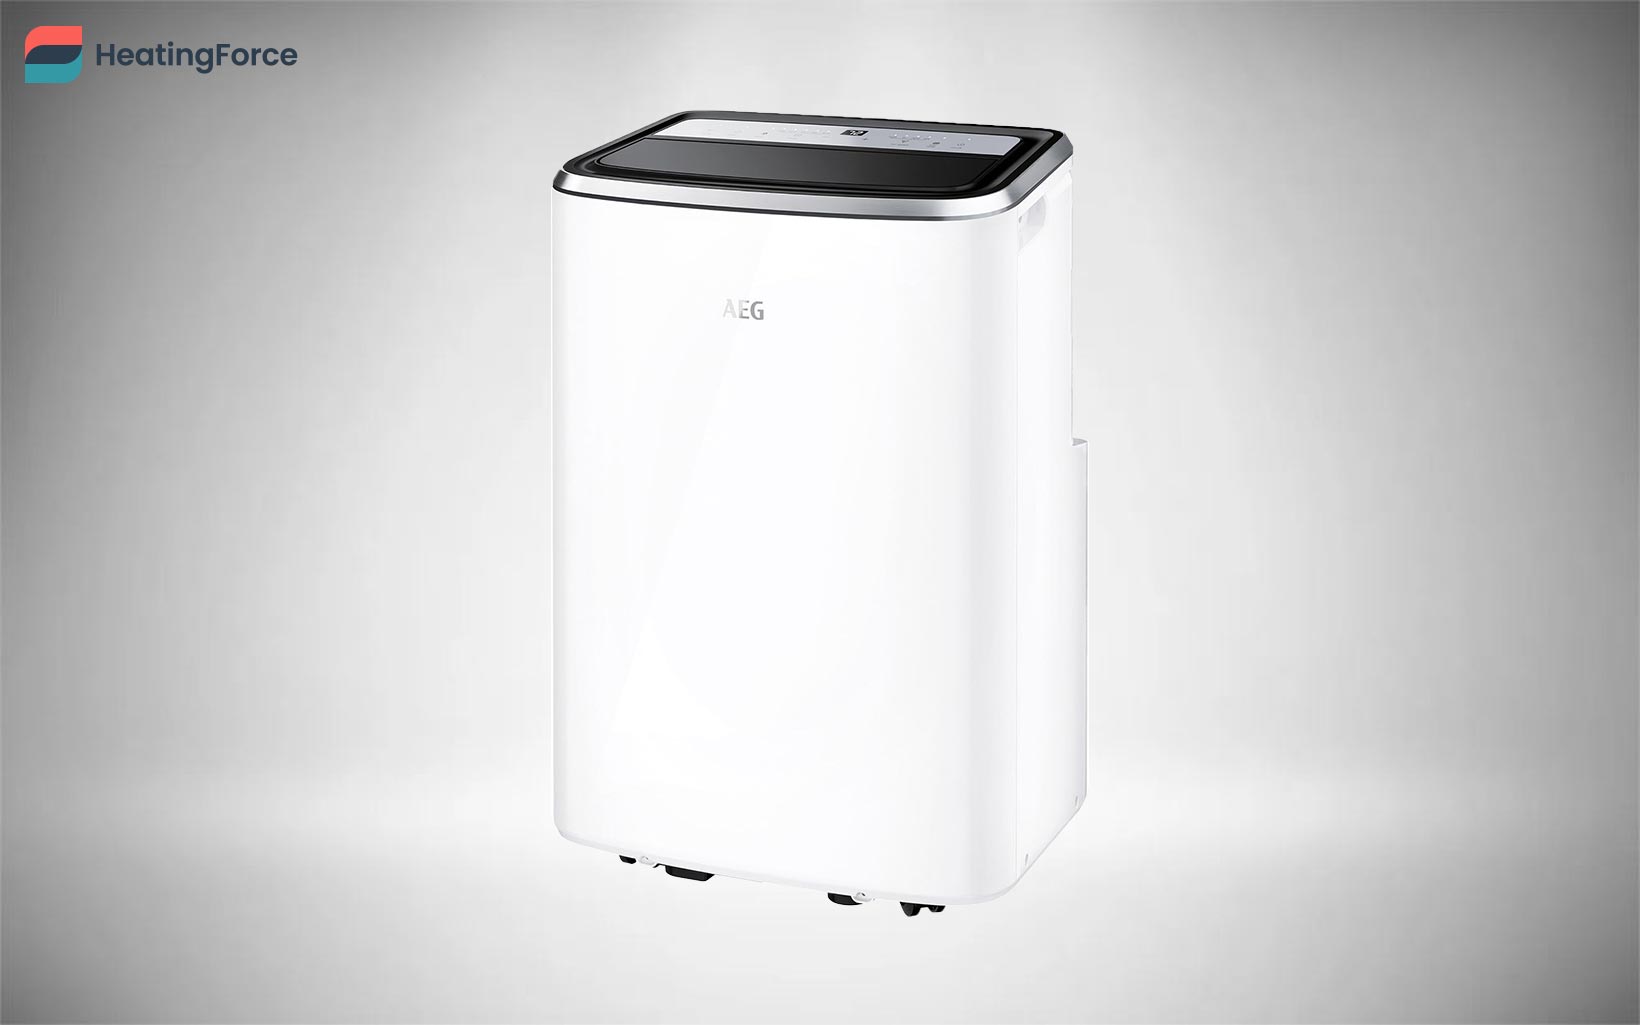 AEG ChillFlex Pro 12000 portable air conditioner